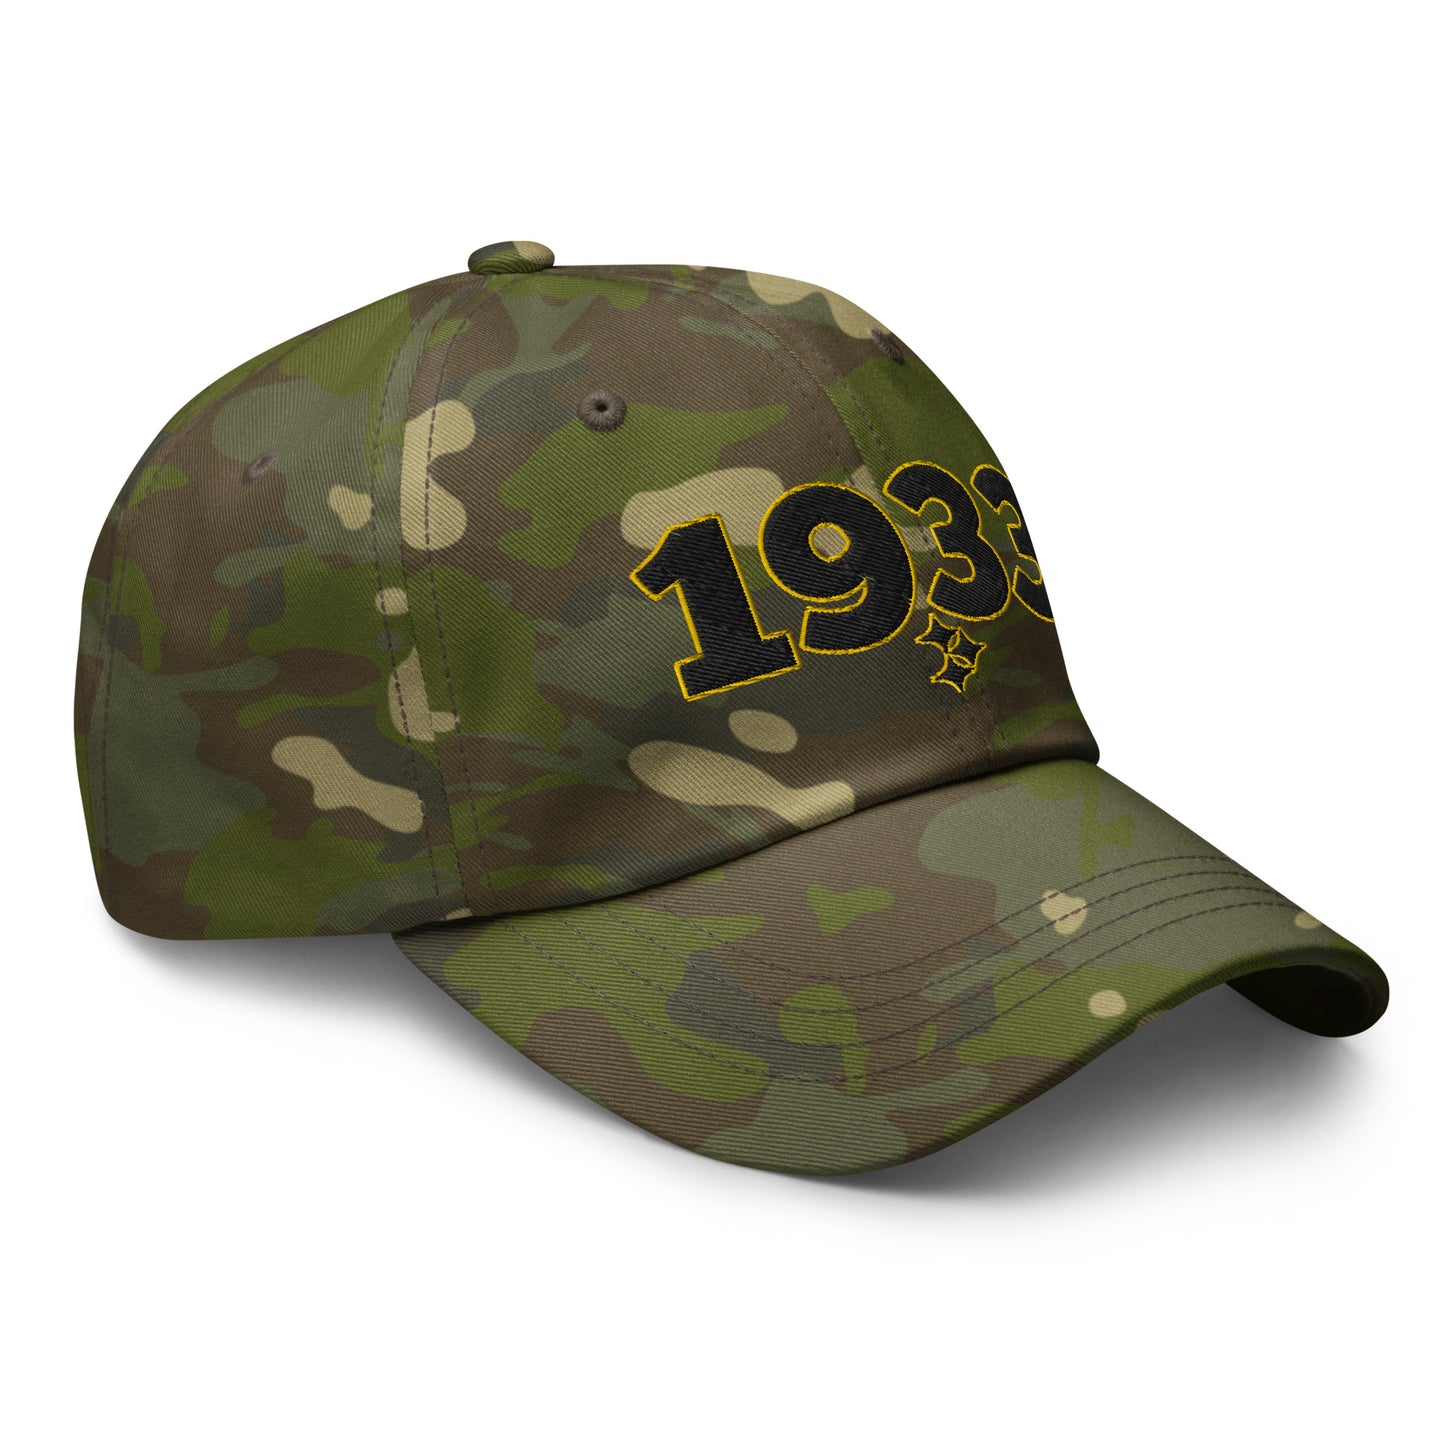 Steelers Camo Hat / Steelers 1933 Hat / 1933 Steelers Multicam dad hat